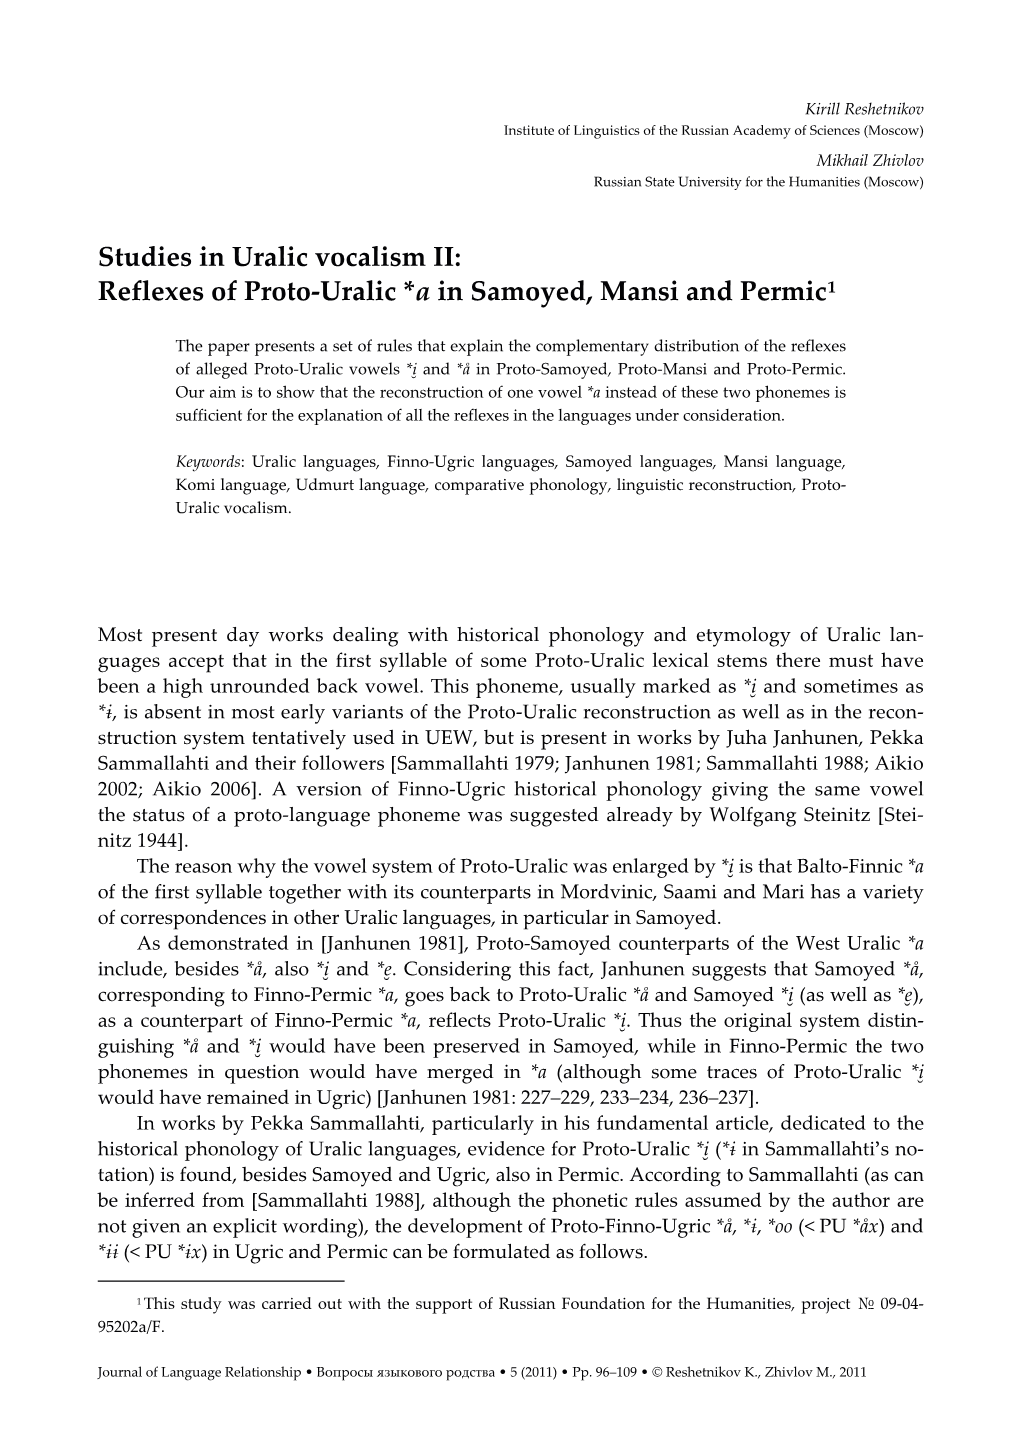 Studies in Uralic Vocalism II: Reflexes of Proto-Uralic *A in Samoyed, Mansi and Permic